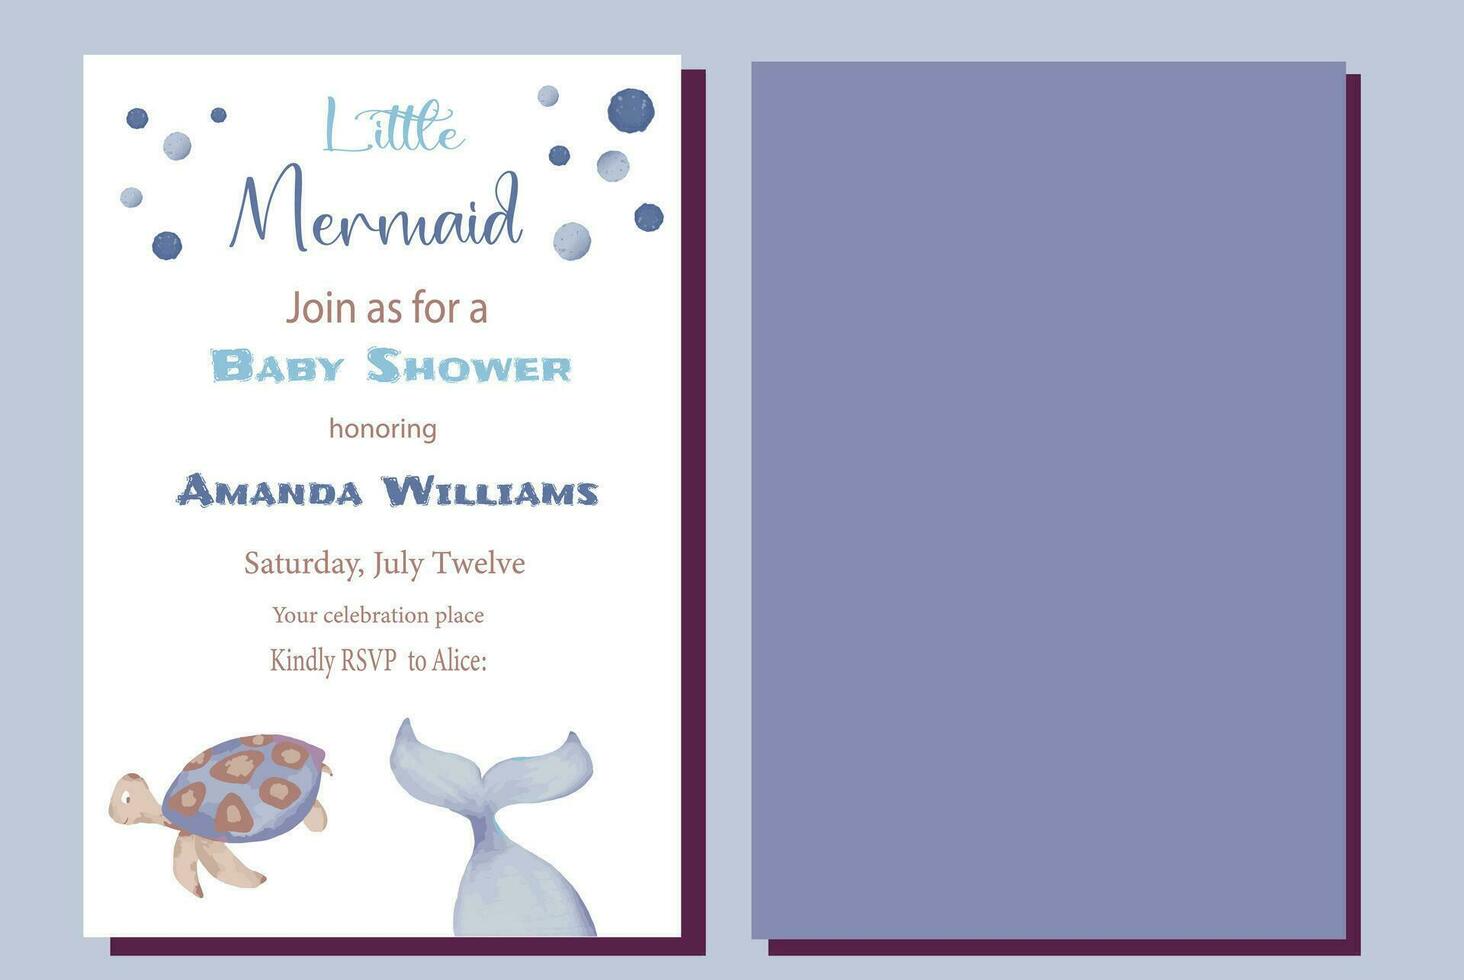 Little Mermaid Under the Sea Baby Shower Invitation vector